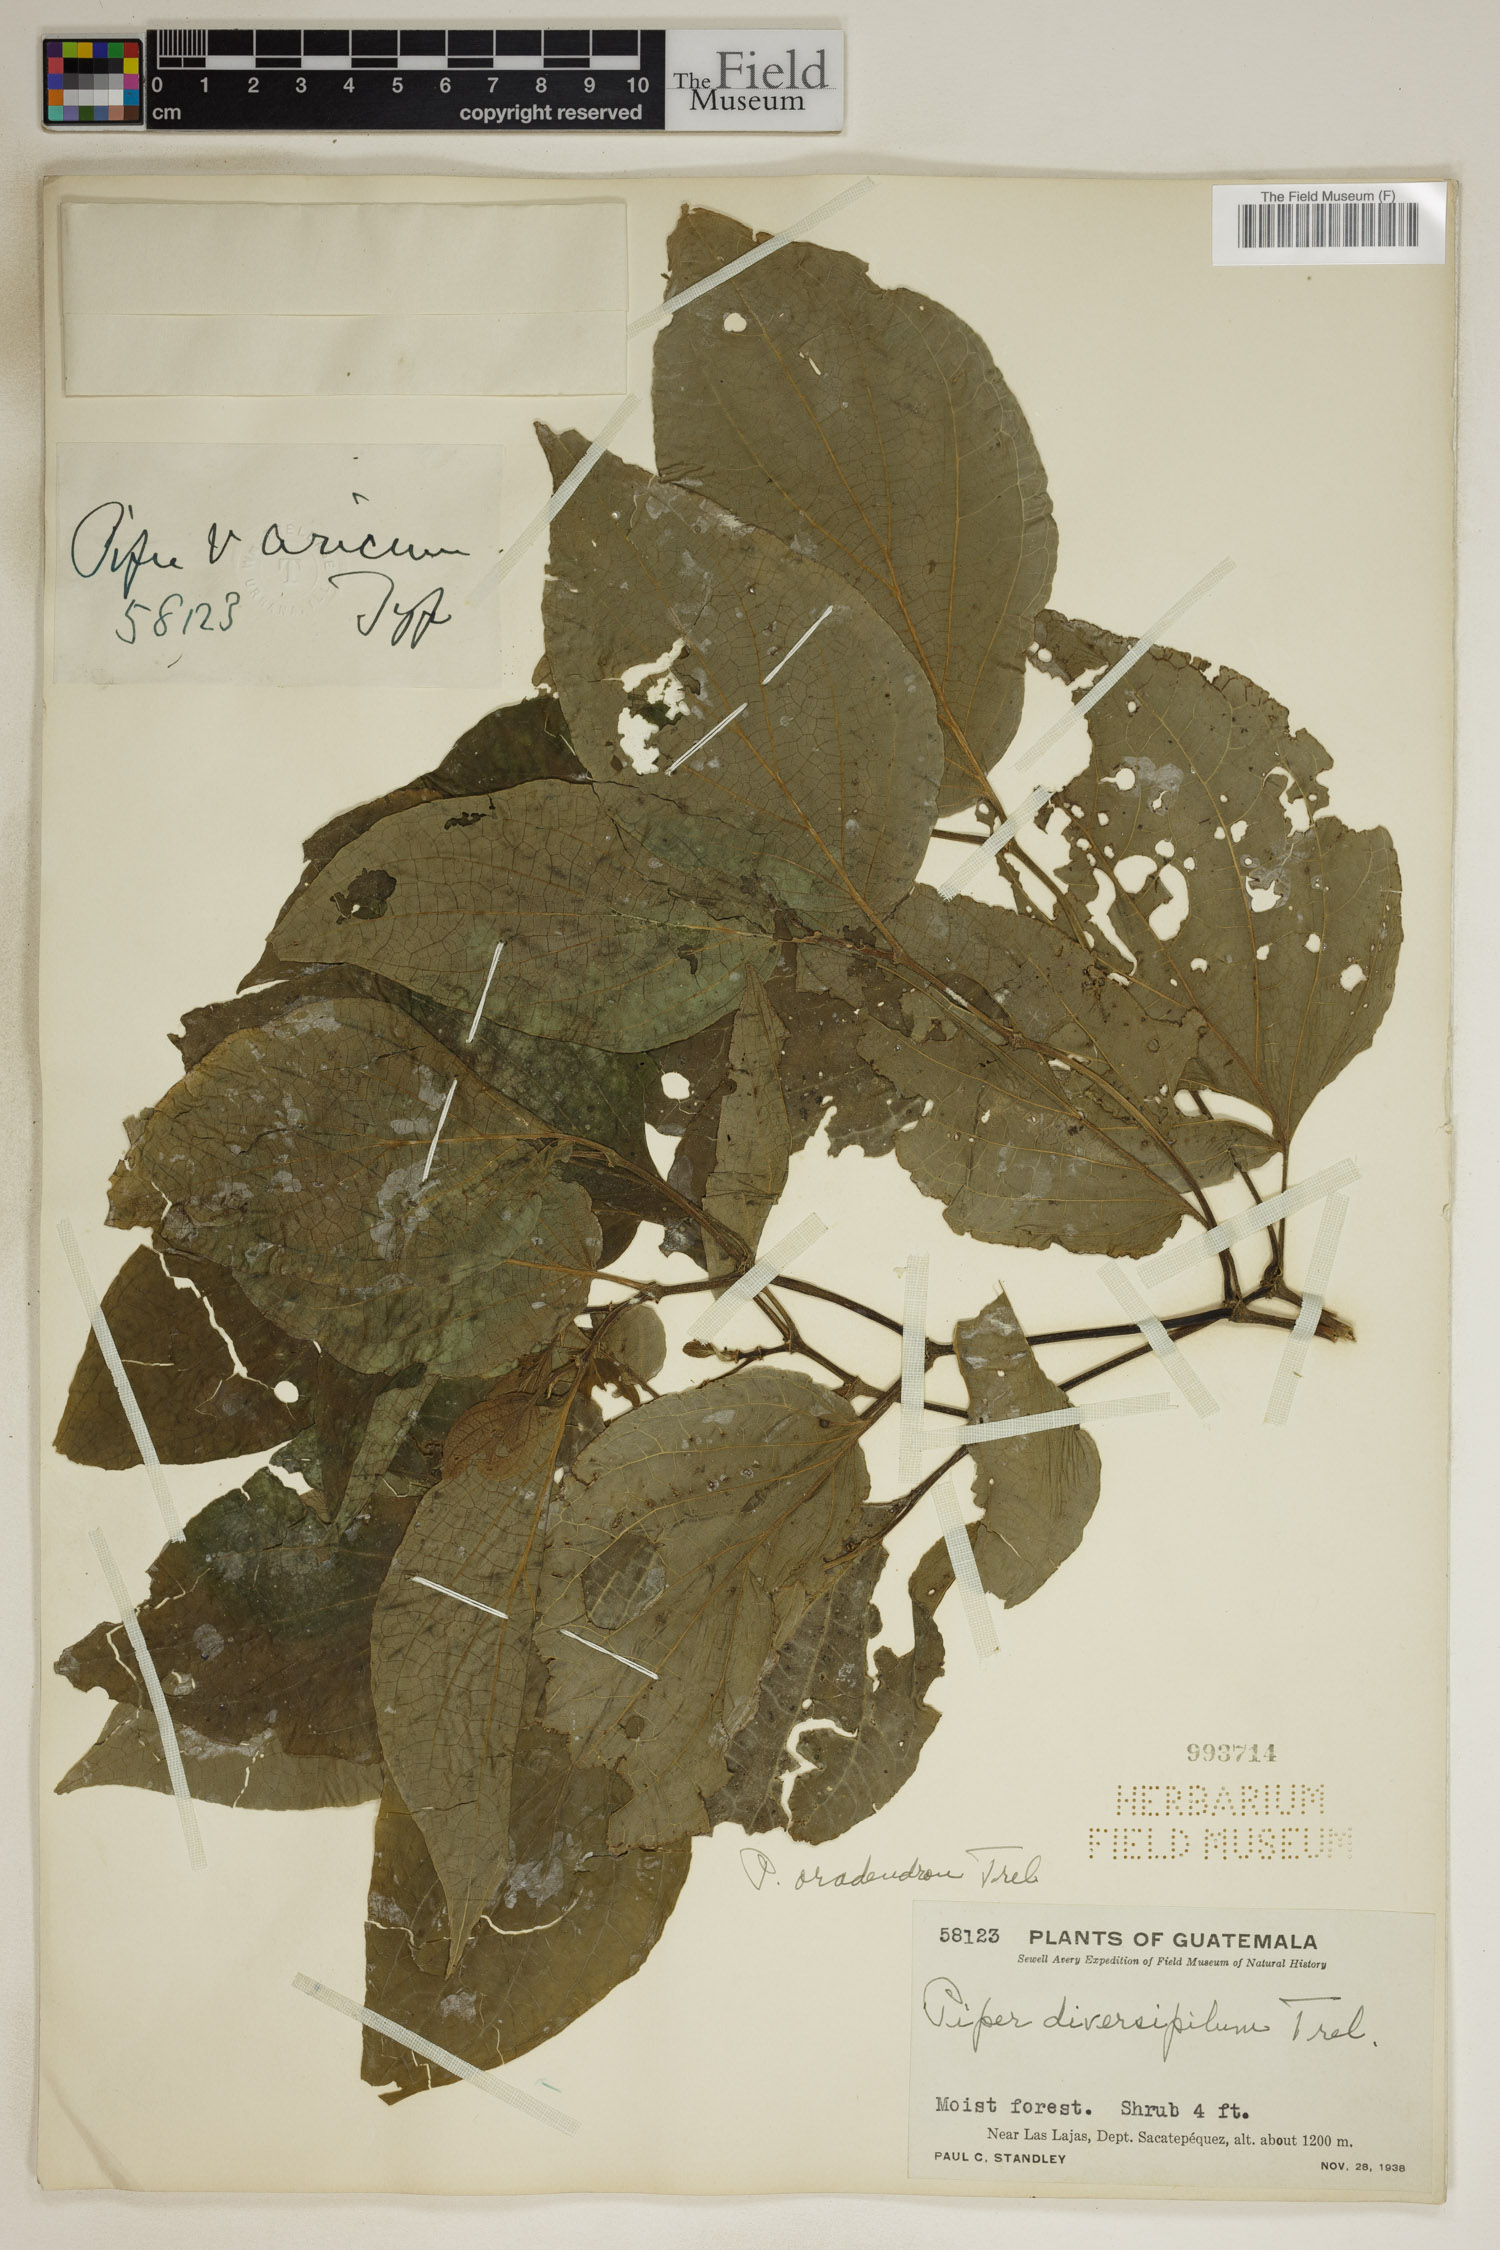 Piper oradendron image